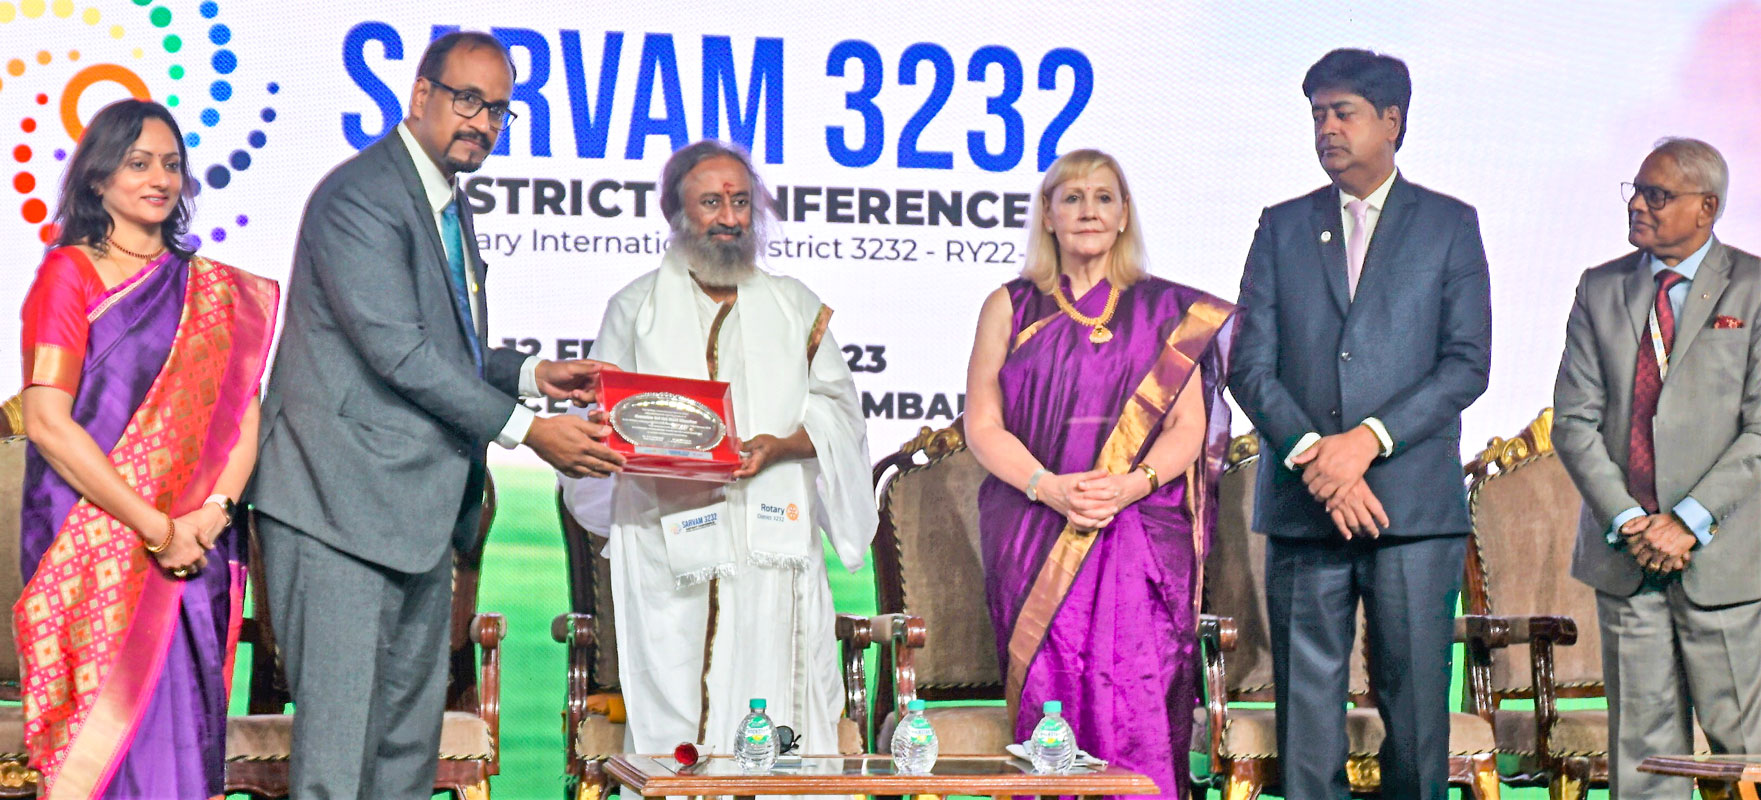 DG N Nandakumar presents a memento to The Art of Living founder Ravi Shankar in the presence of (from L) Sumedha, RIDs Elizabeth Usovicz and A S Venkatesh, and RIDE Anirudha Roychowdhury.